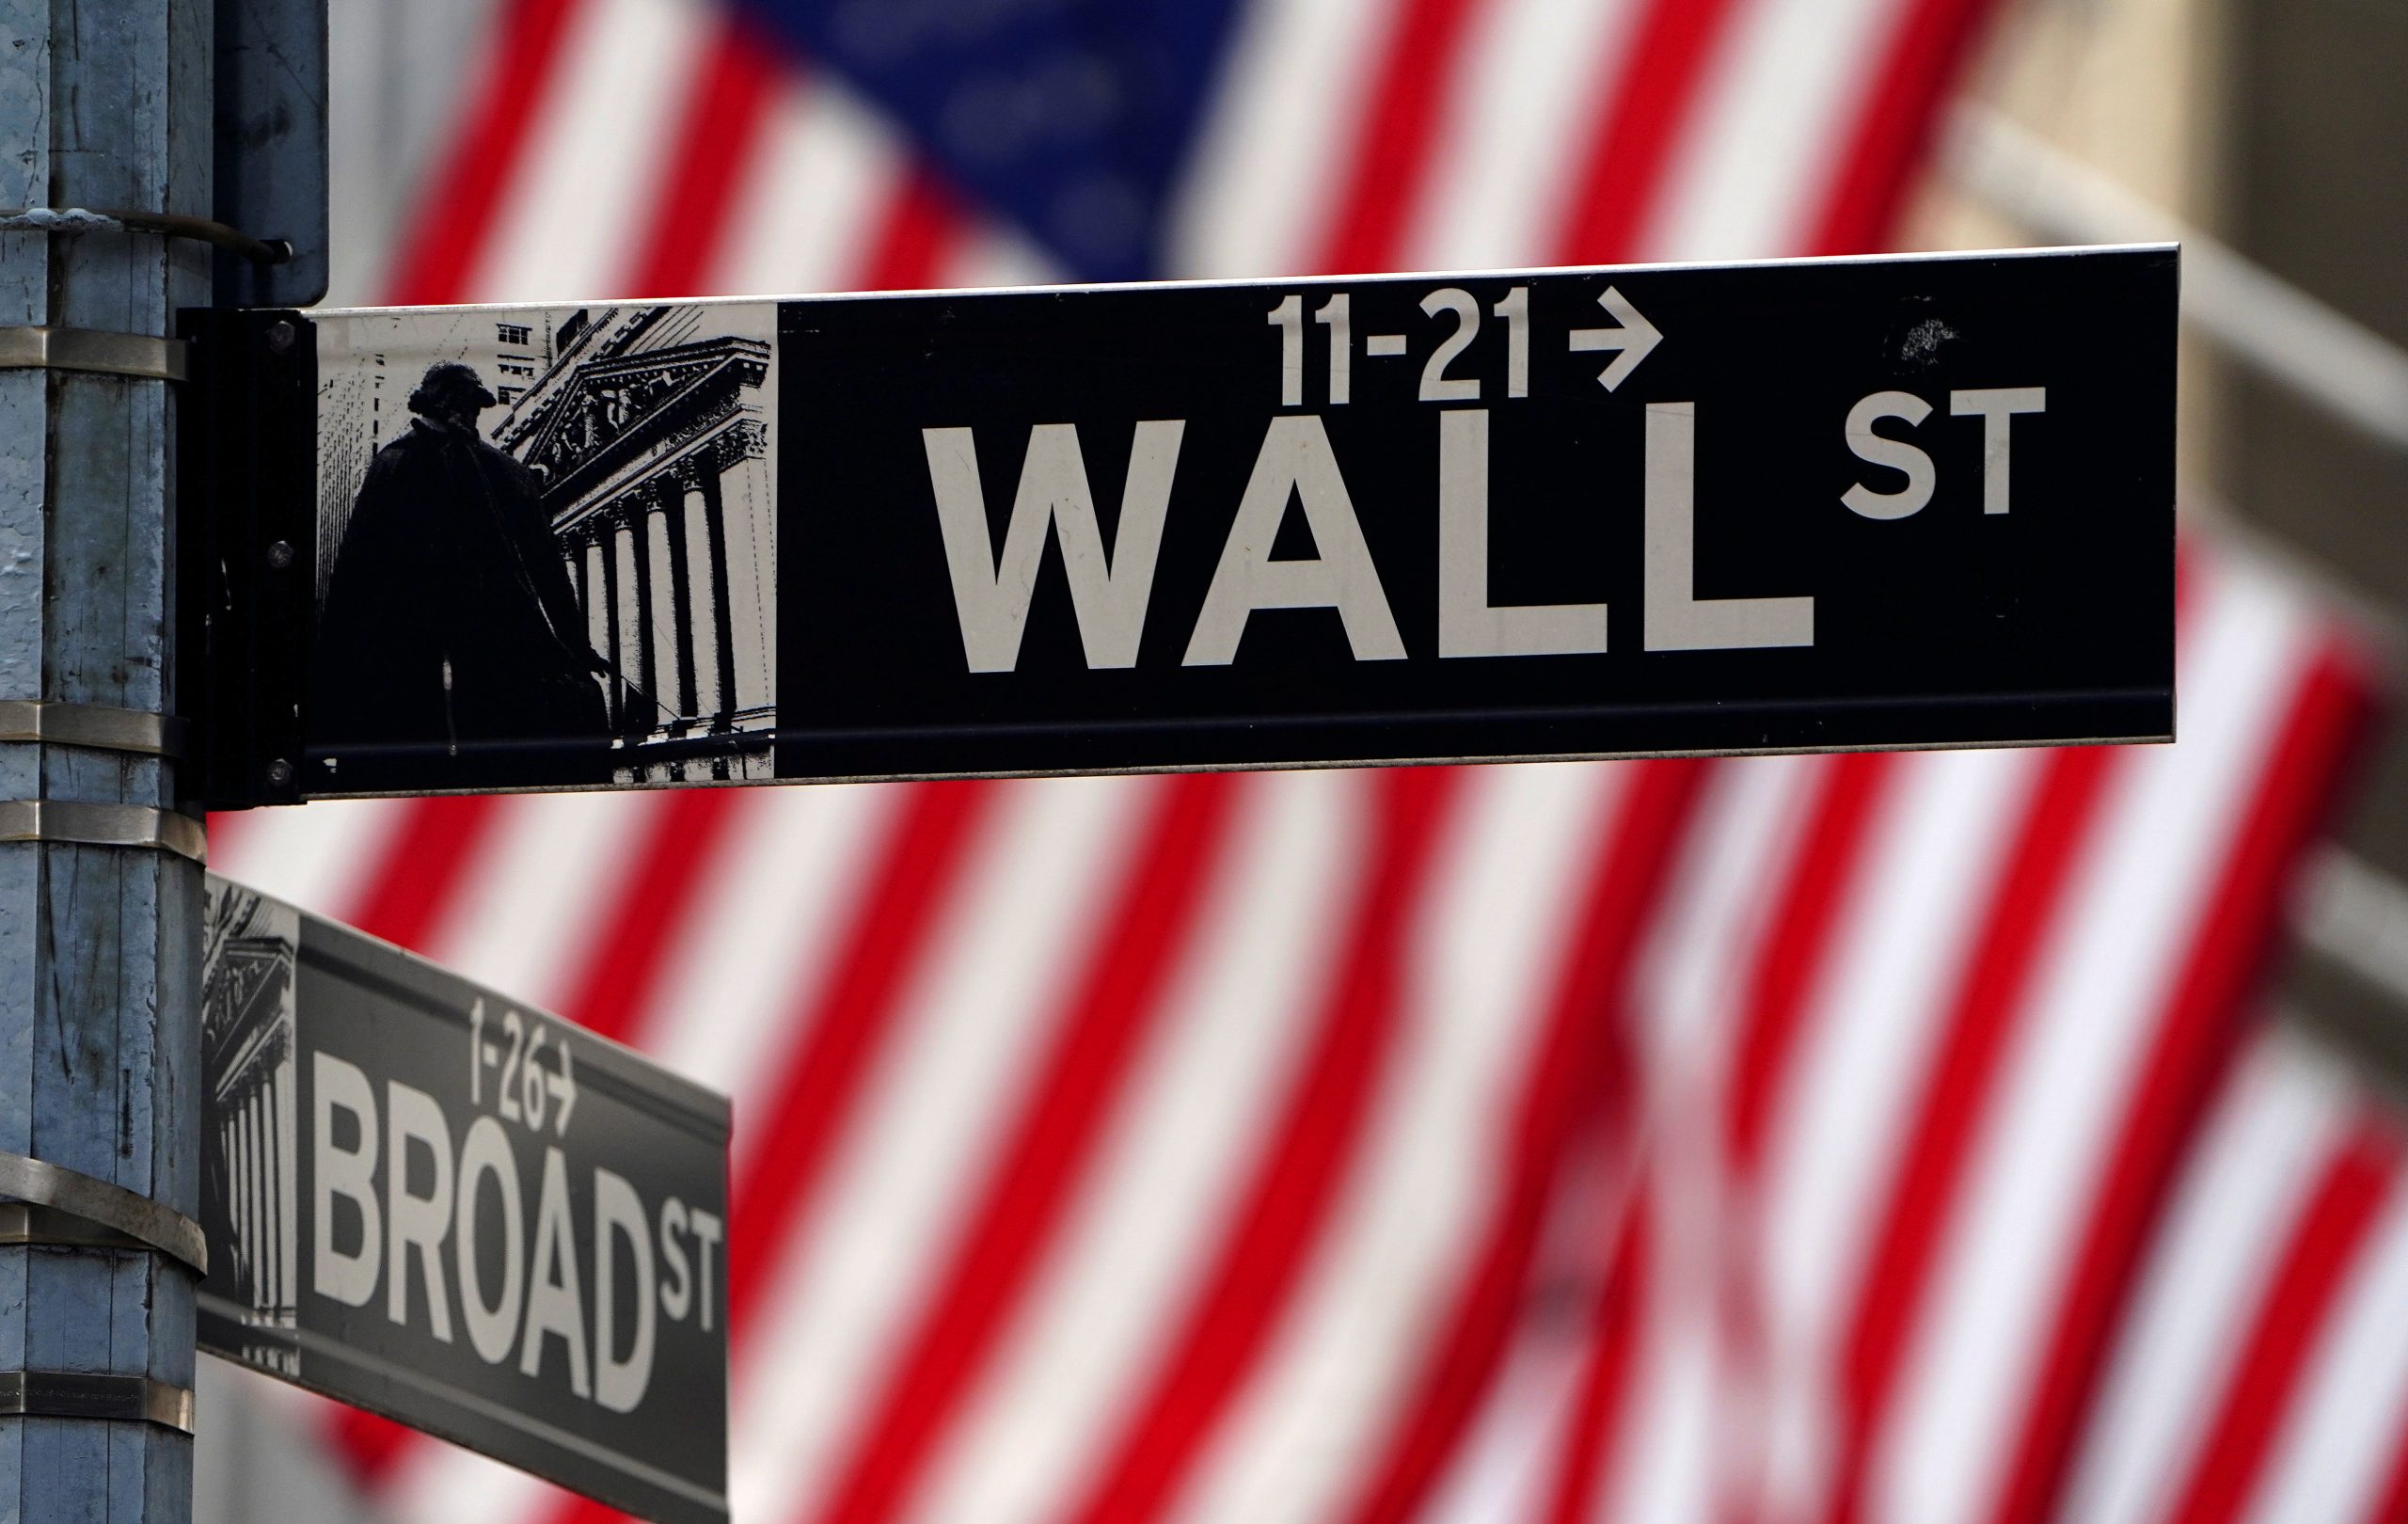  Oatly, Procore debuts calm U.S. IPO jitters